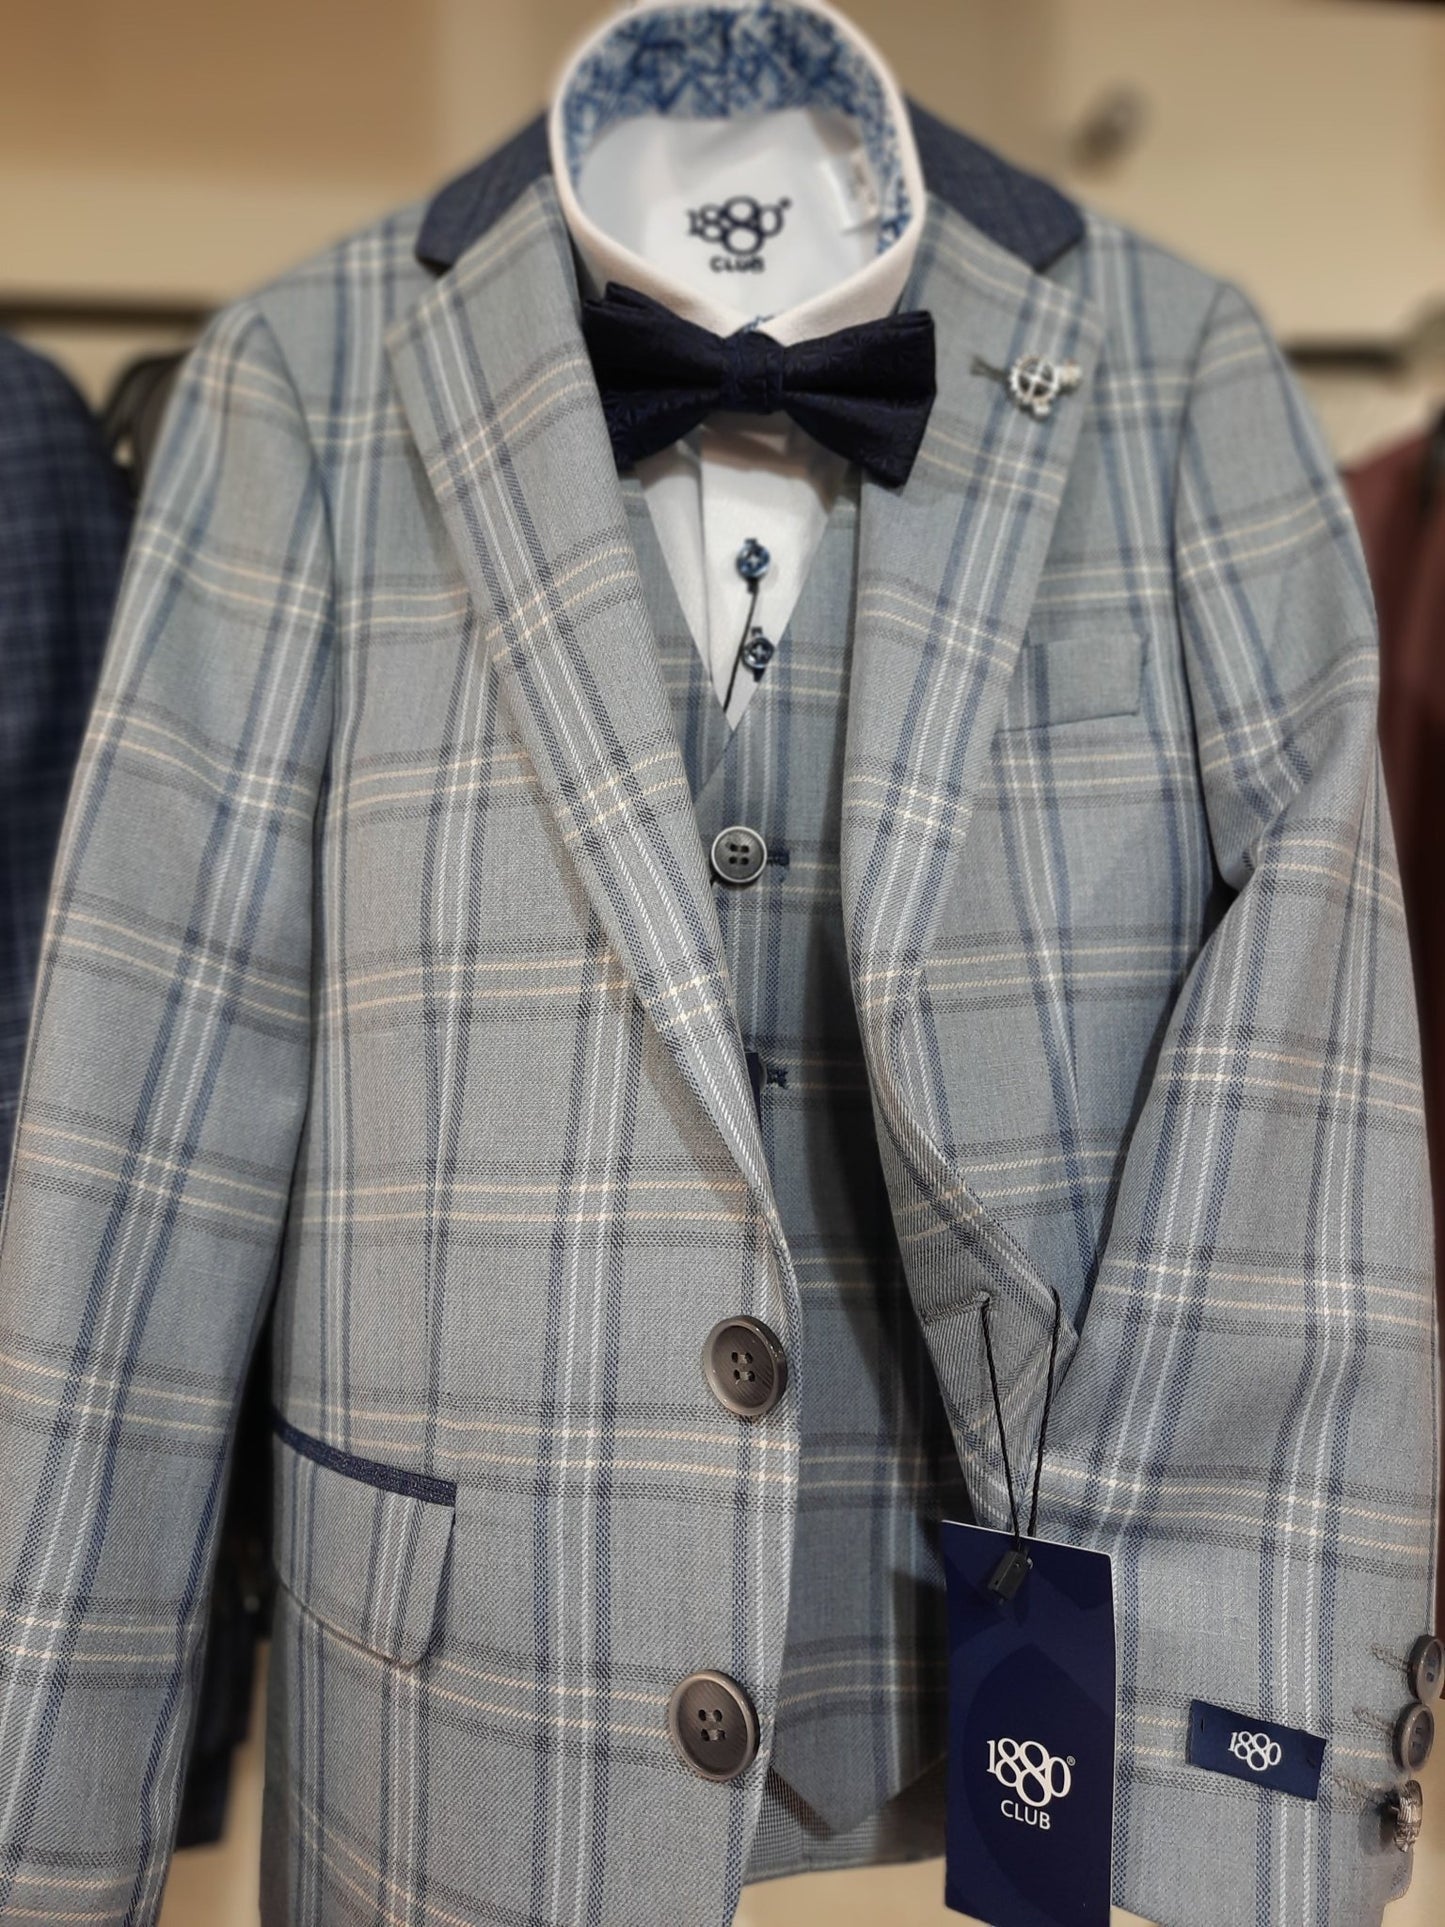 1880 Club Boys Jacket 15118 - Matt O'Brien Fashions